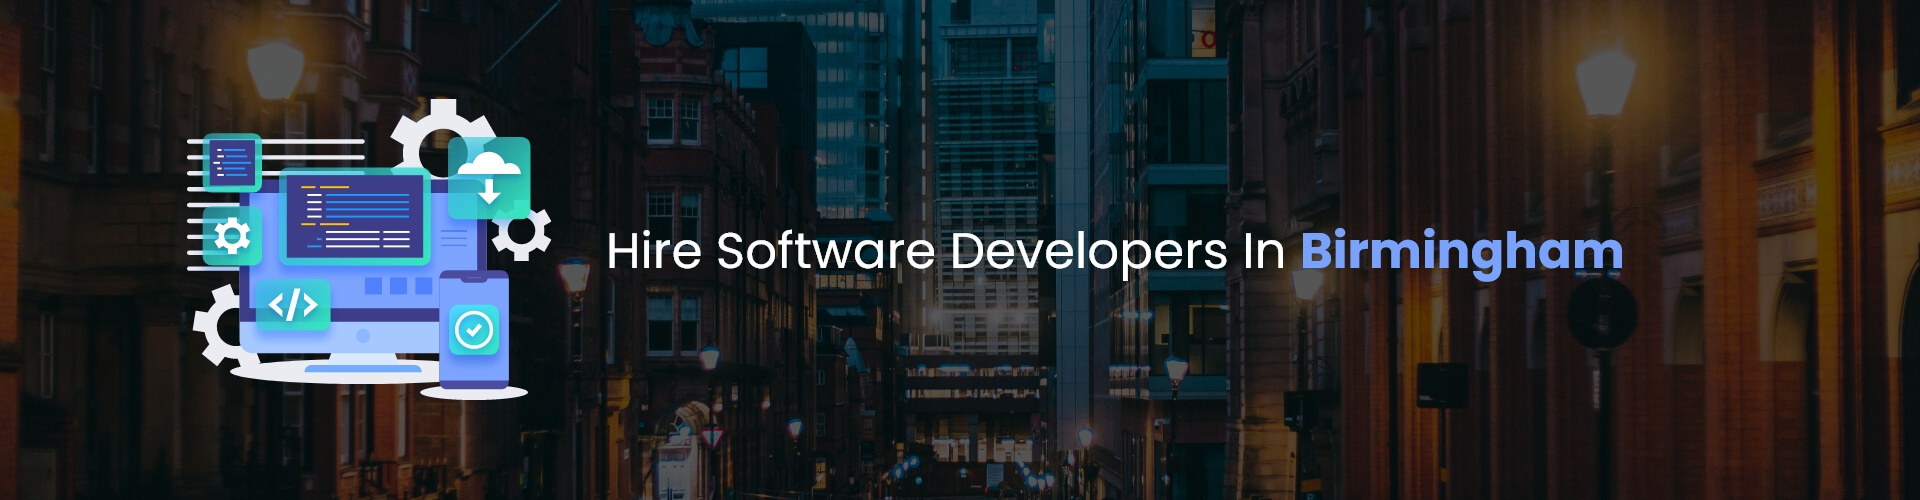 hire software developers in birmingham